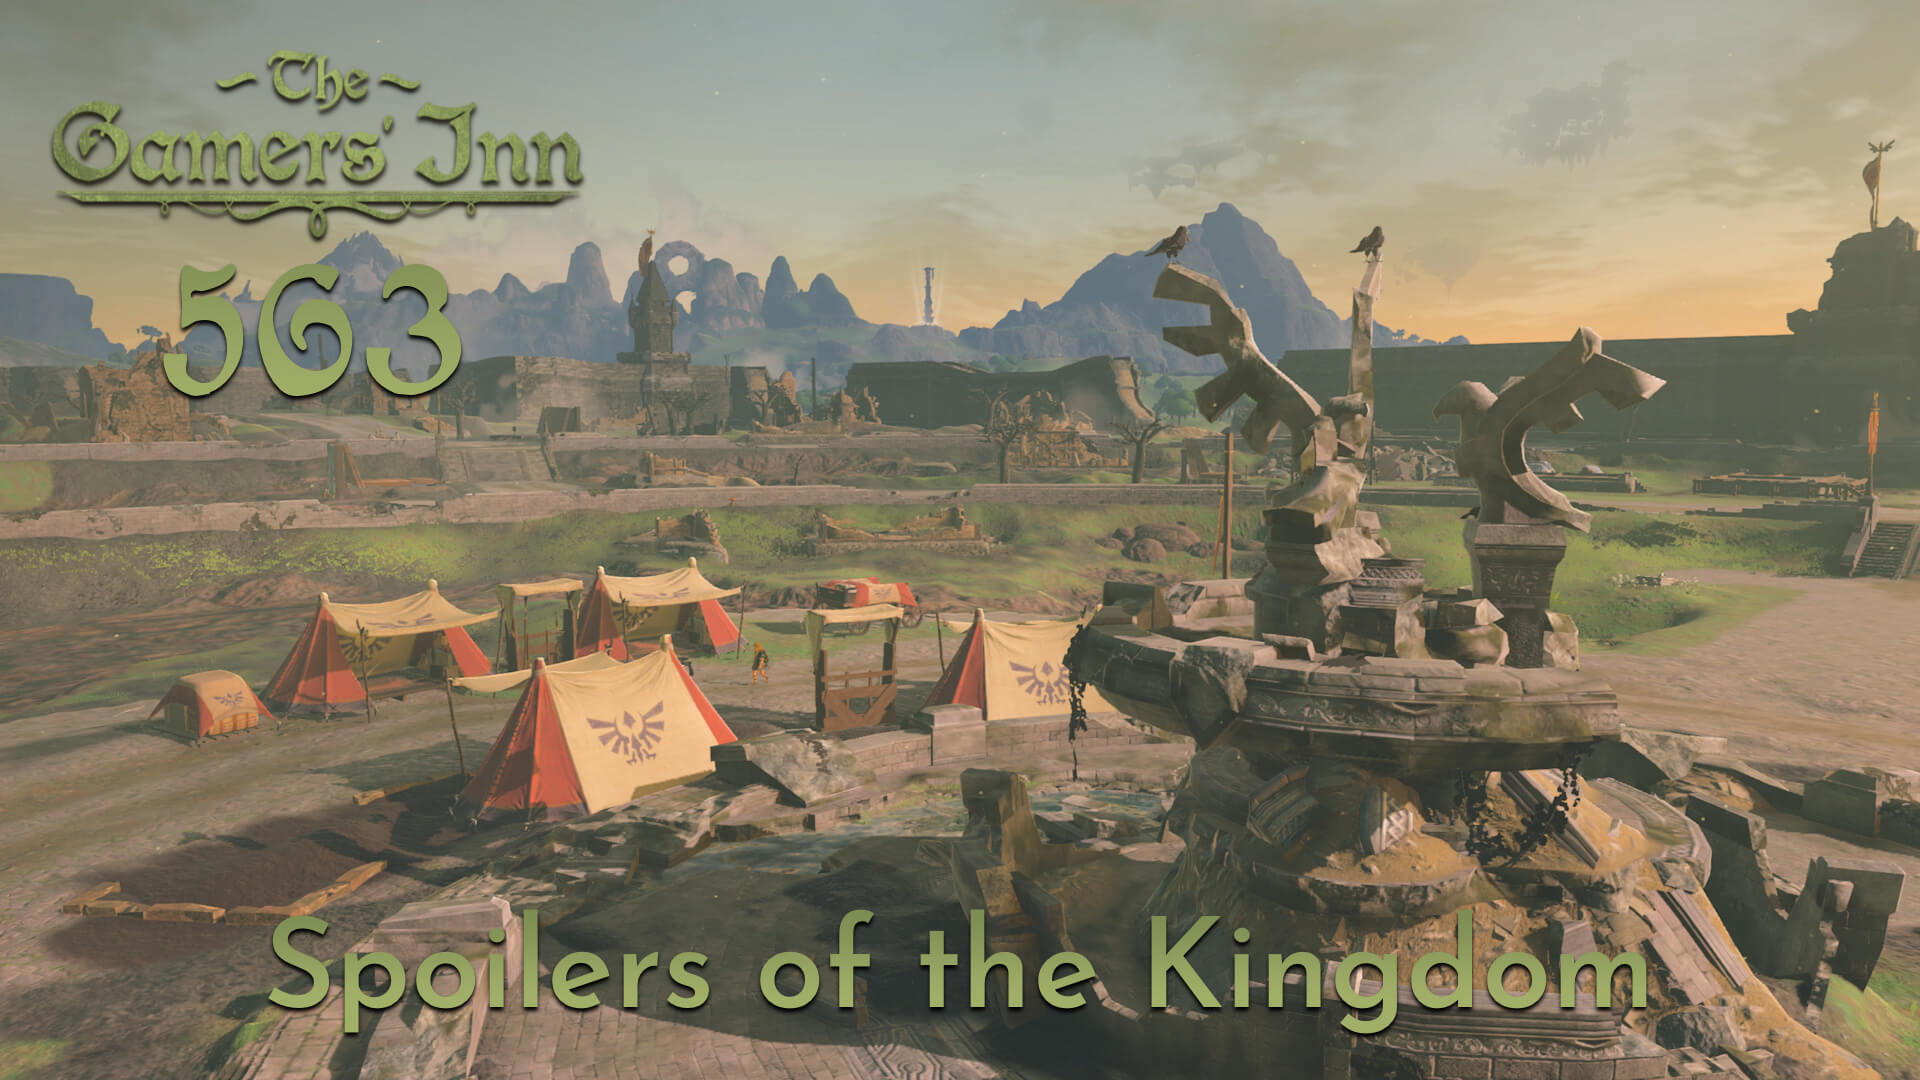 TGI 563 - Spoilers of the Kingdom